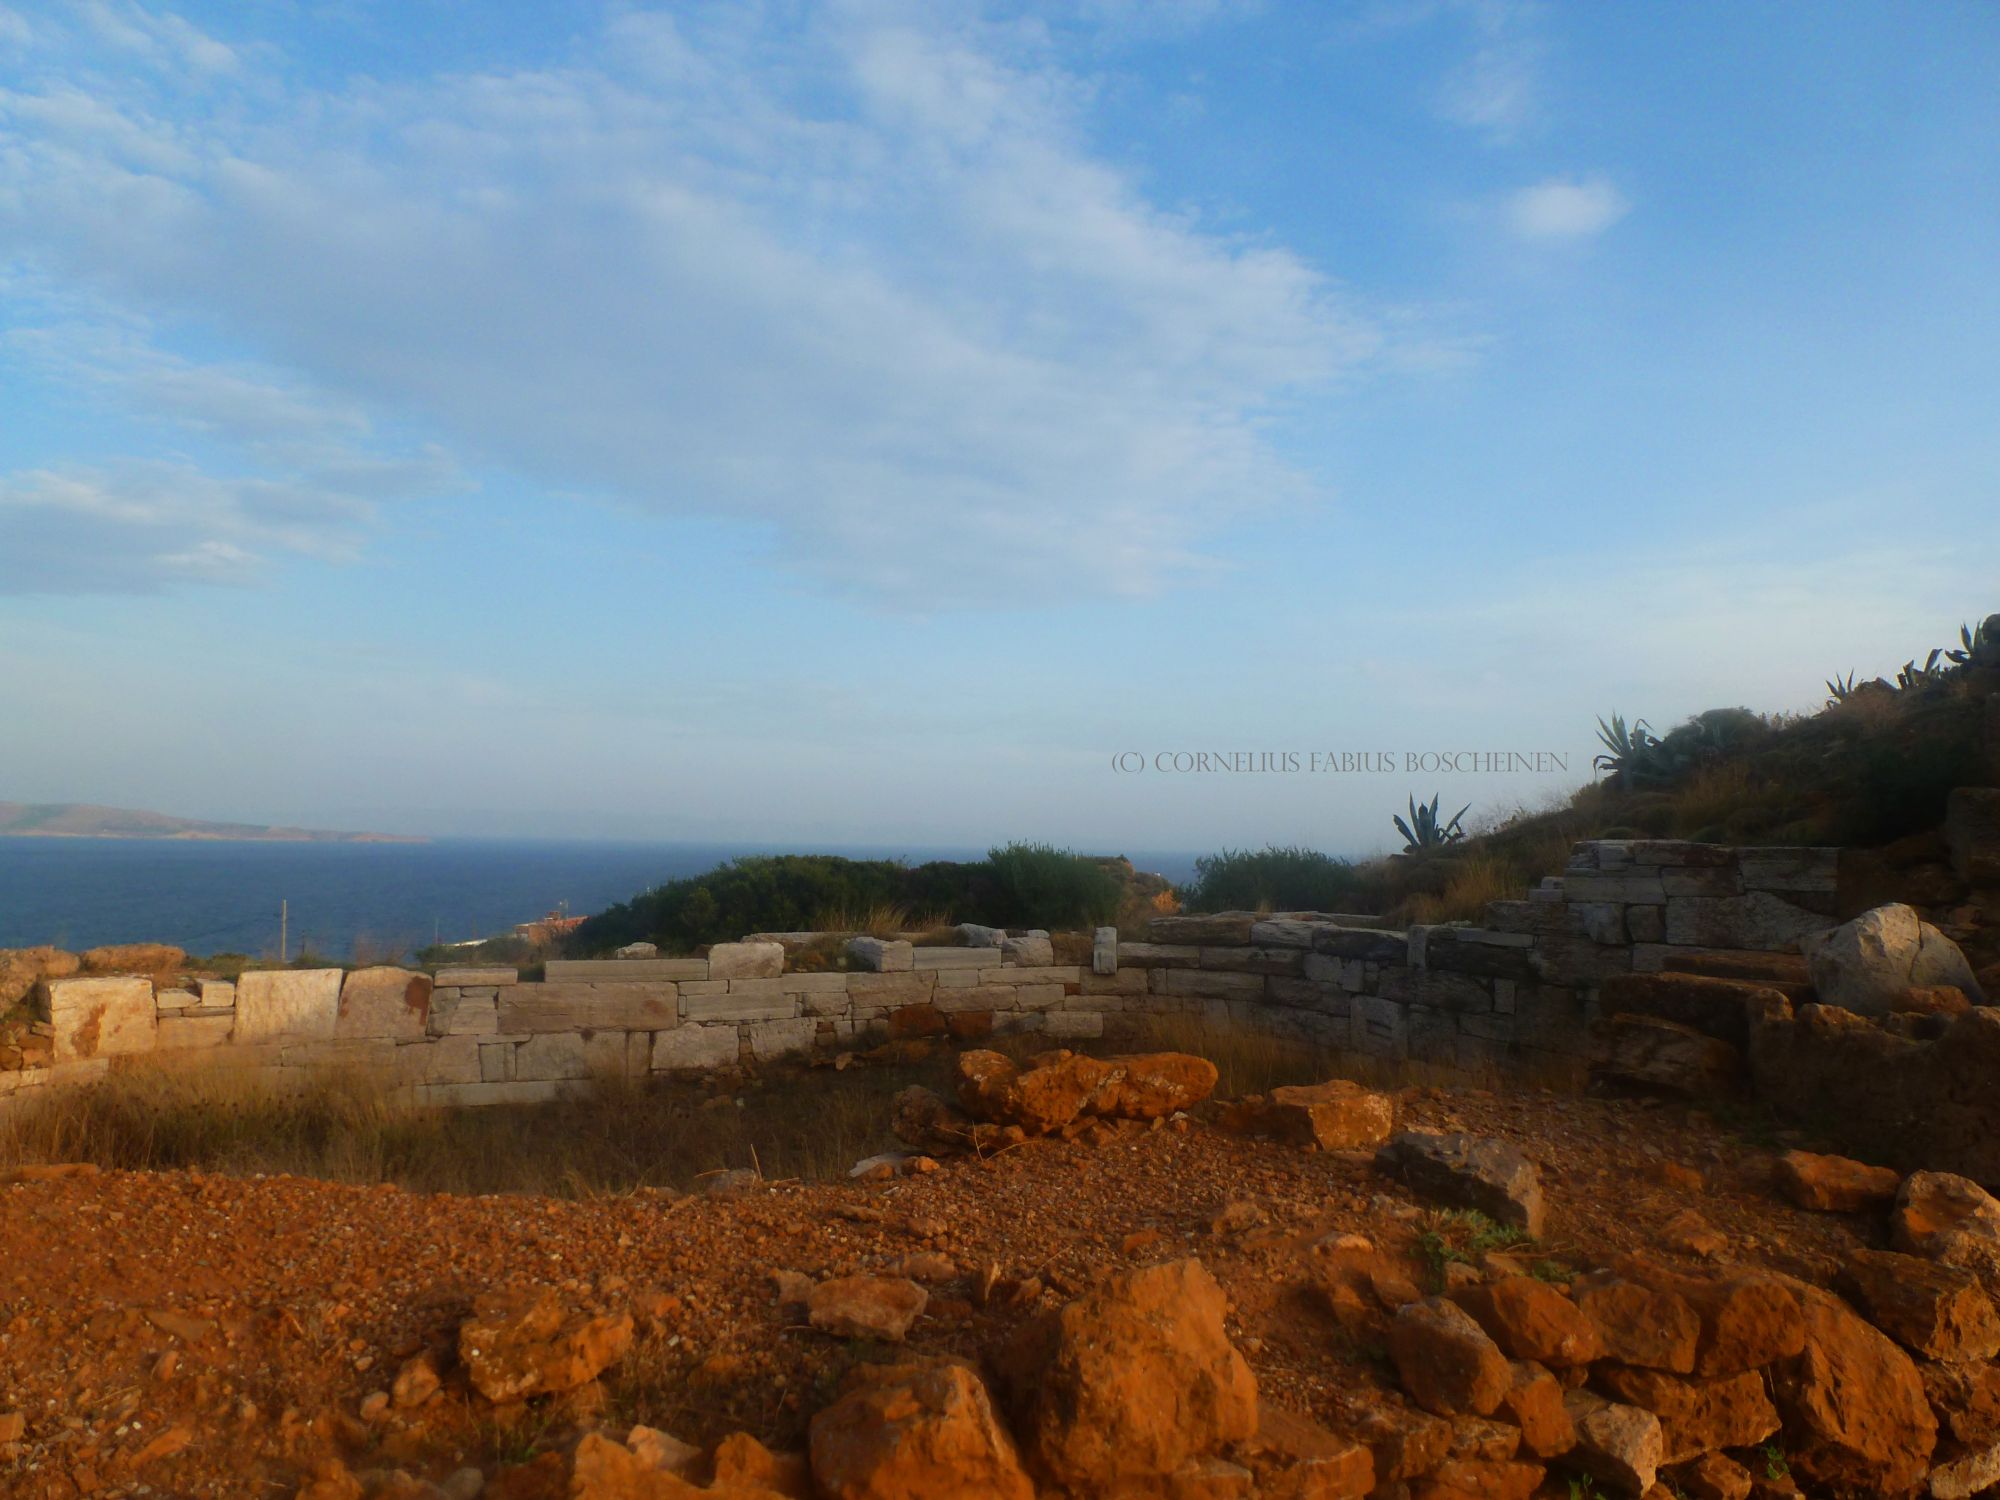 Reste der antiken Stadtbefestigung am Kap Sounion.